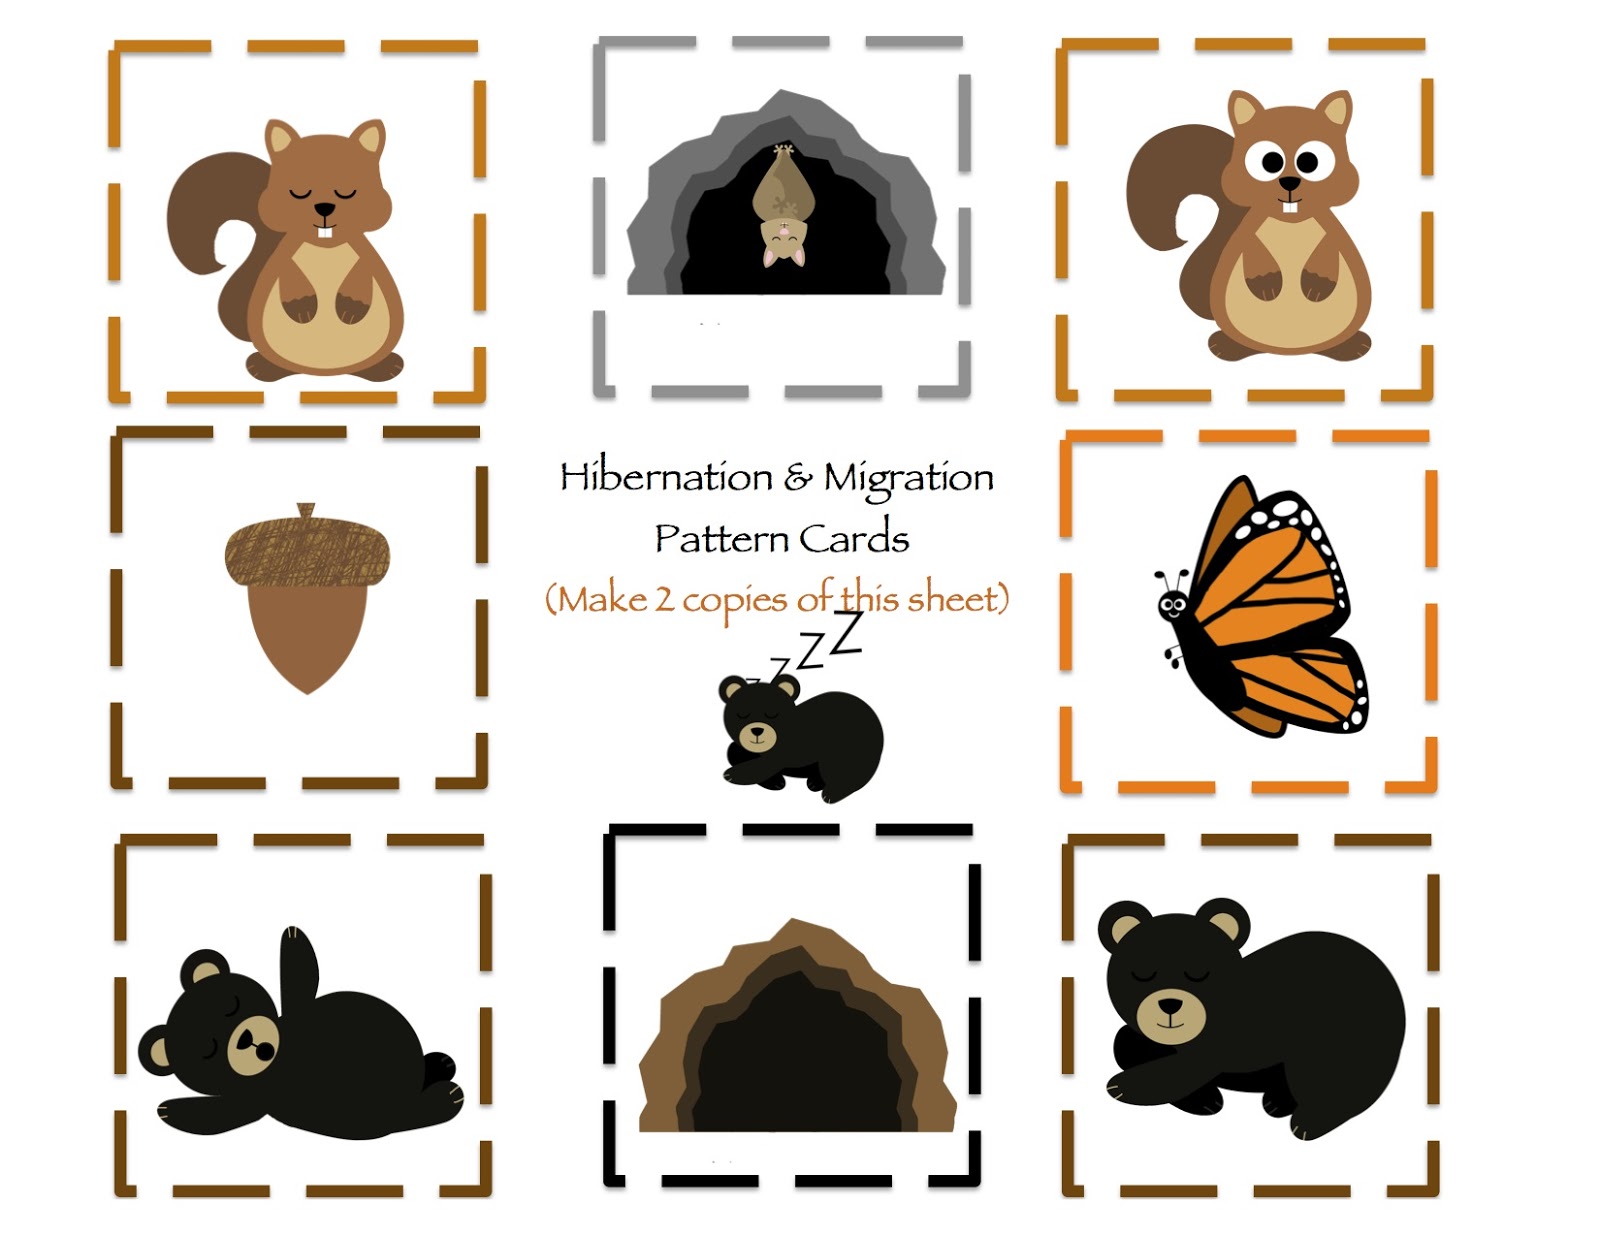 942 New preschool worksheet on hibernation 523 Hibernation & Migration Printable 